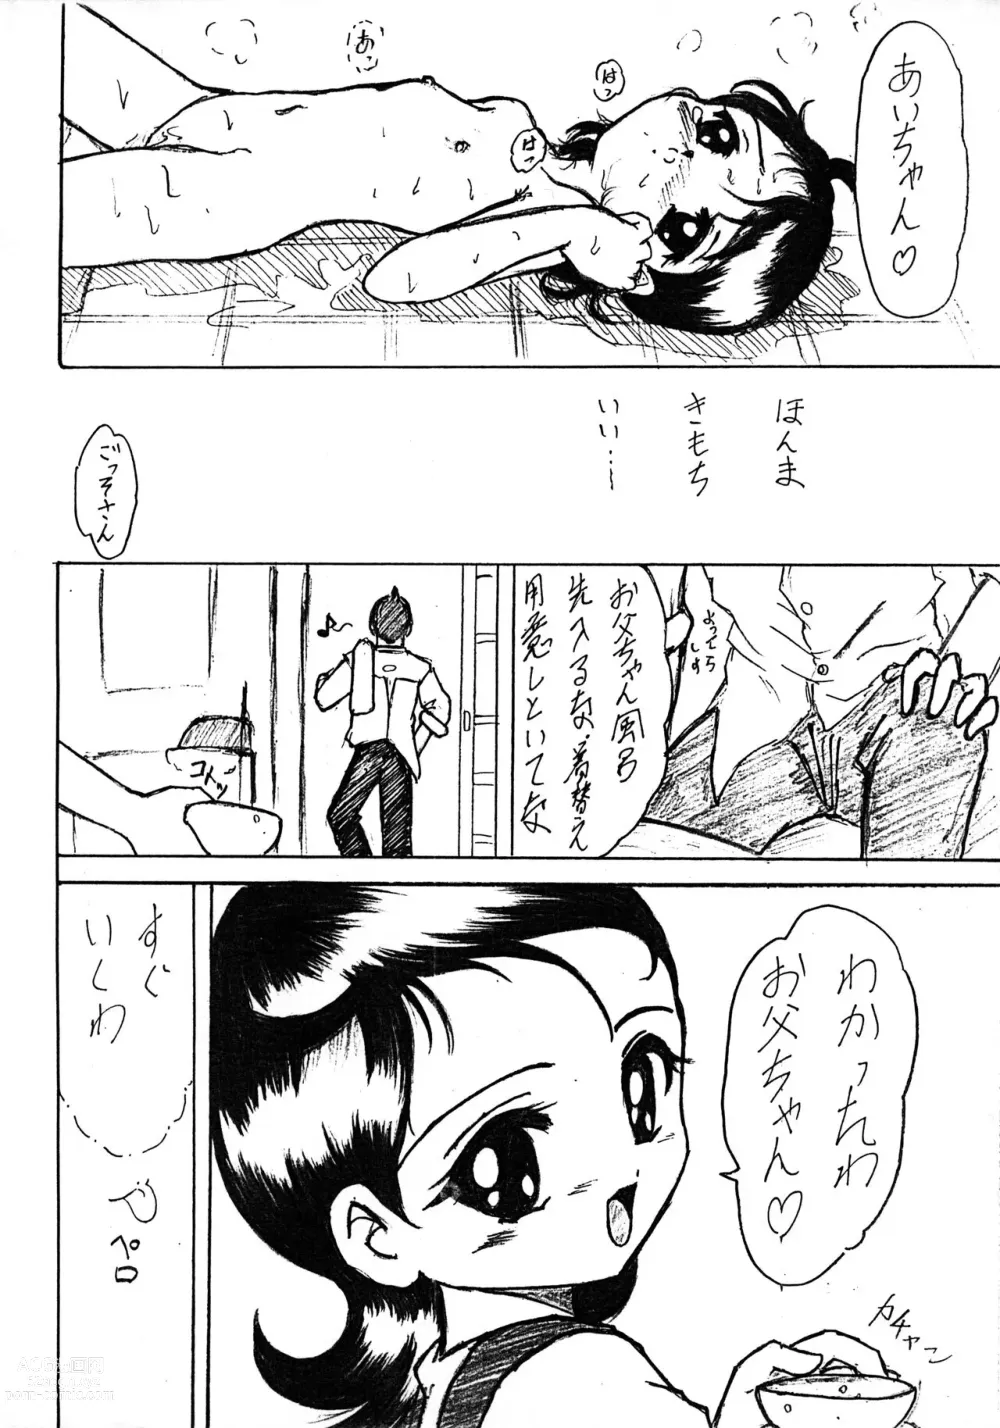 Page 8 of doujinshi OMAKE